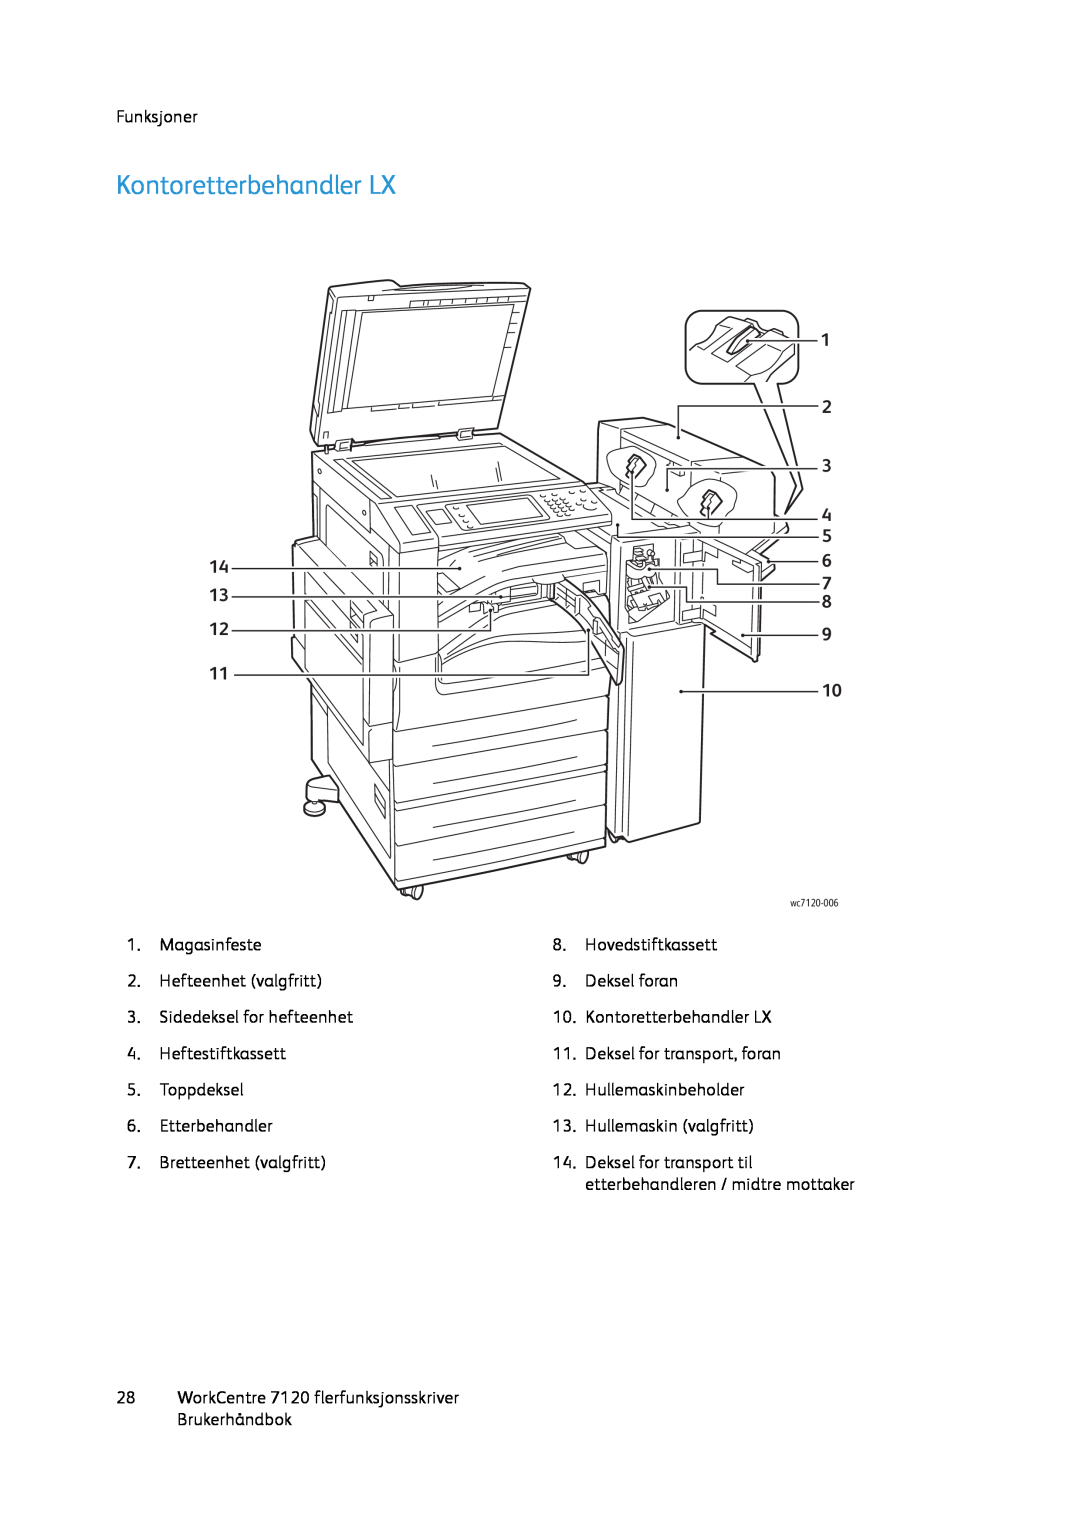 Xerox 7120 manual Kontoretterbehandler LX, etterbehandleren / midtre mottaker 